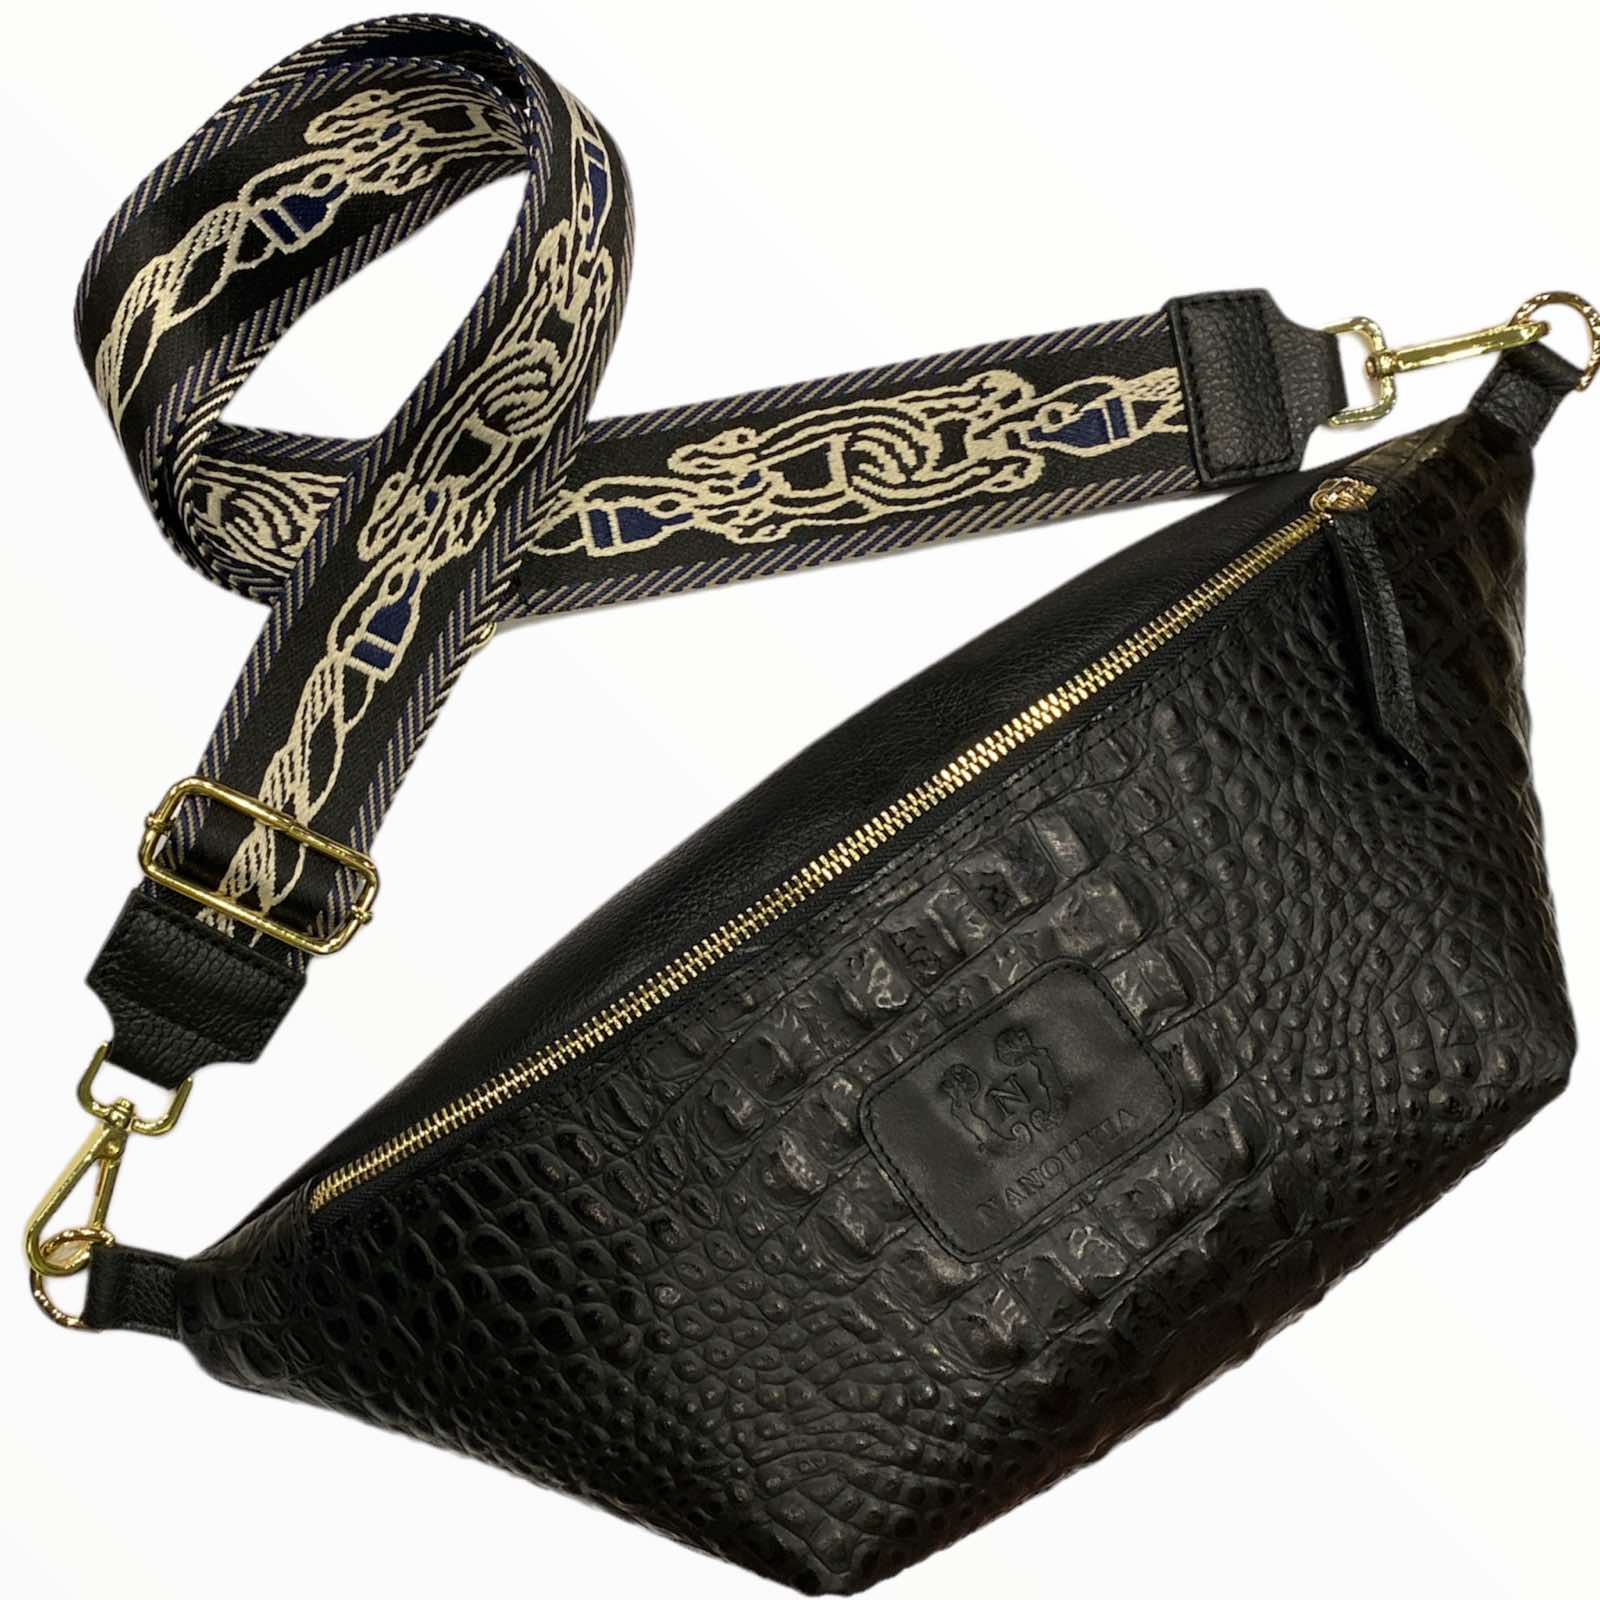 XL black alligator-print leather belt bag with chic strap